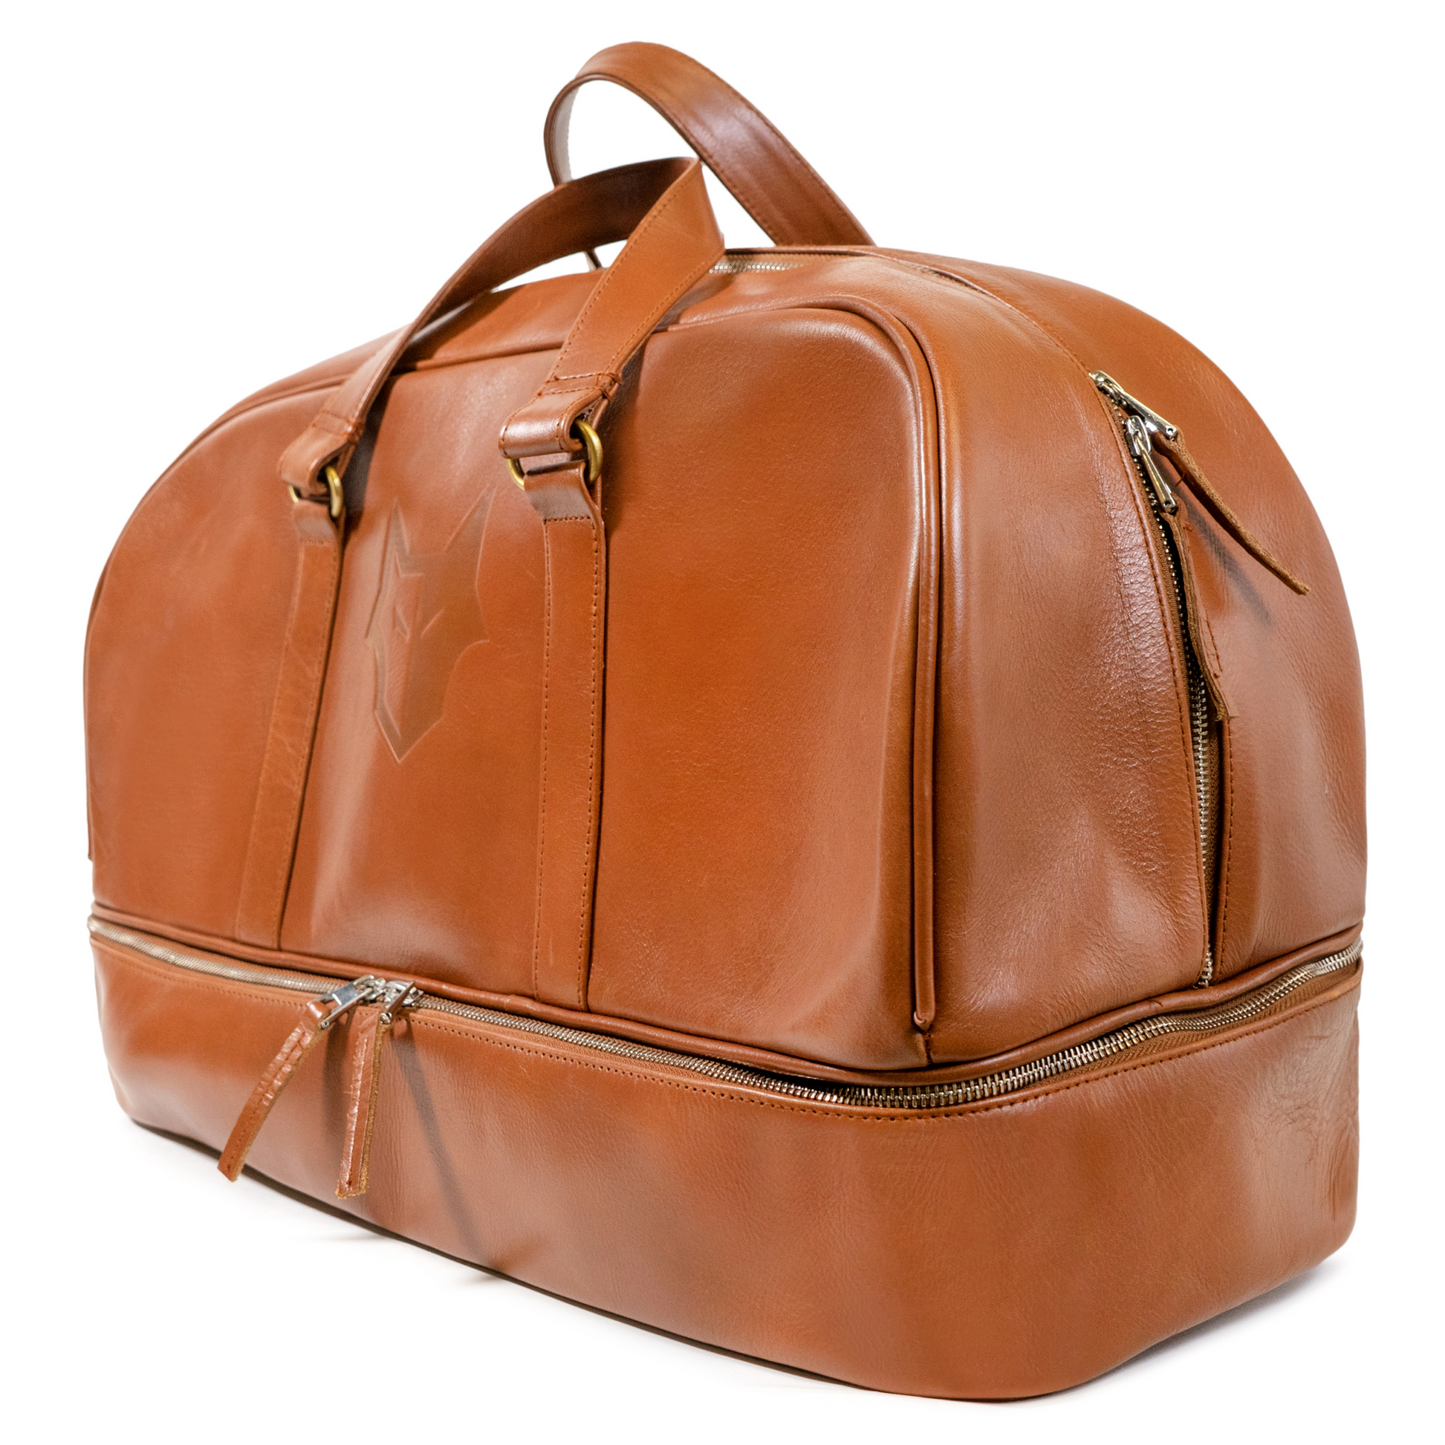 The Original Duffle Bag